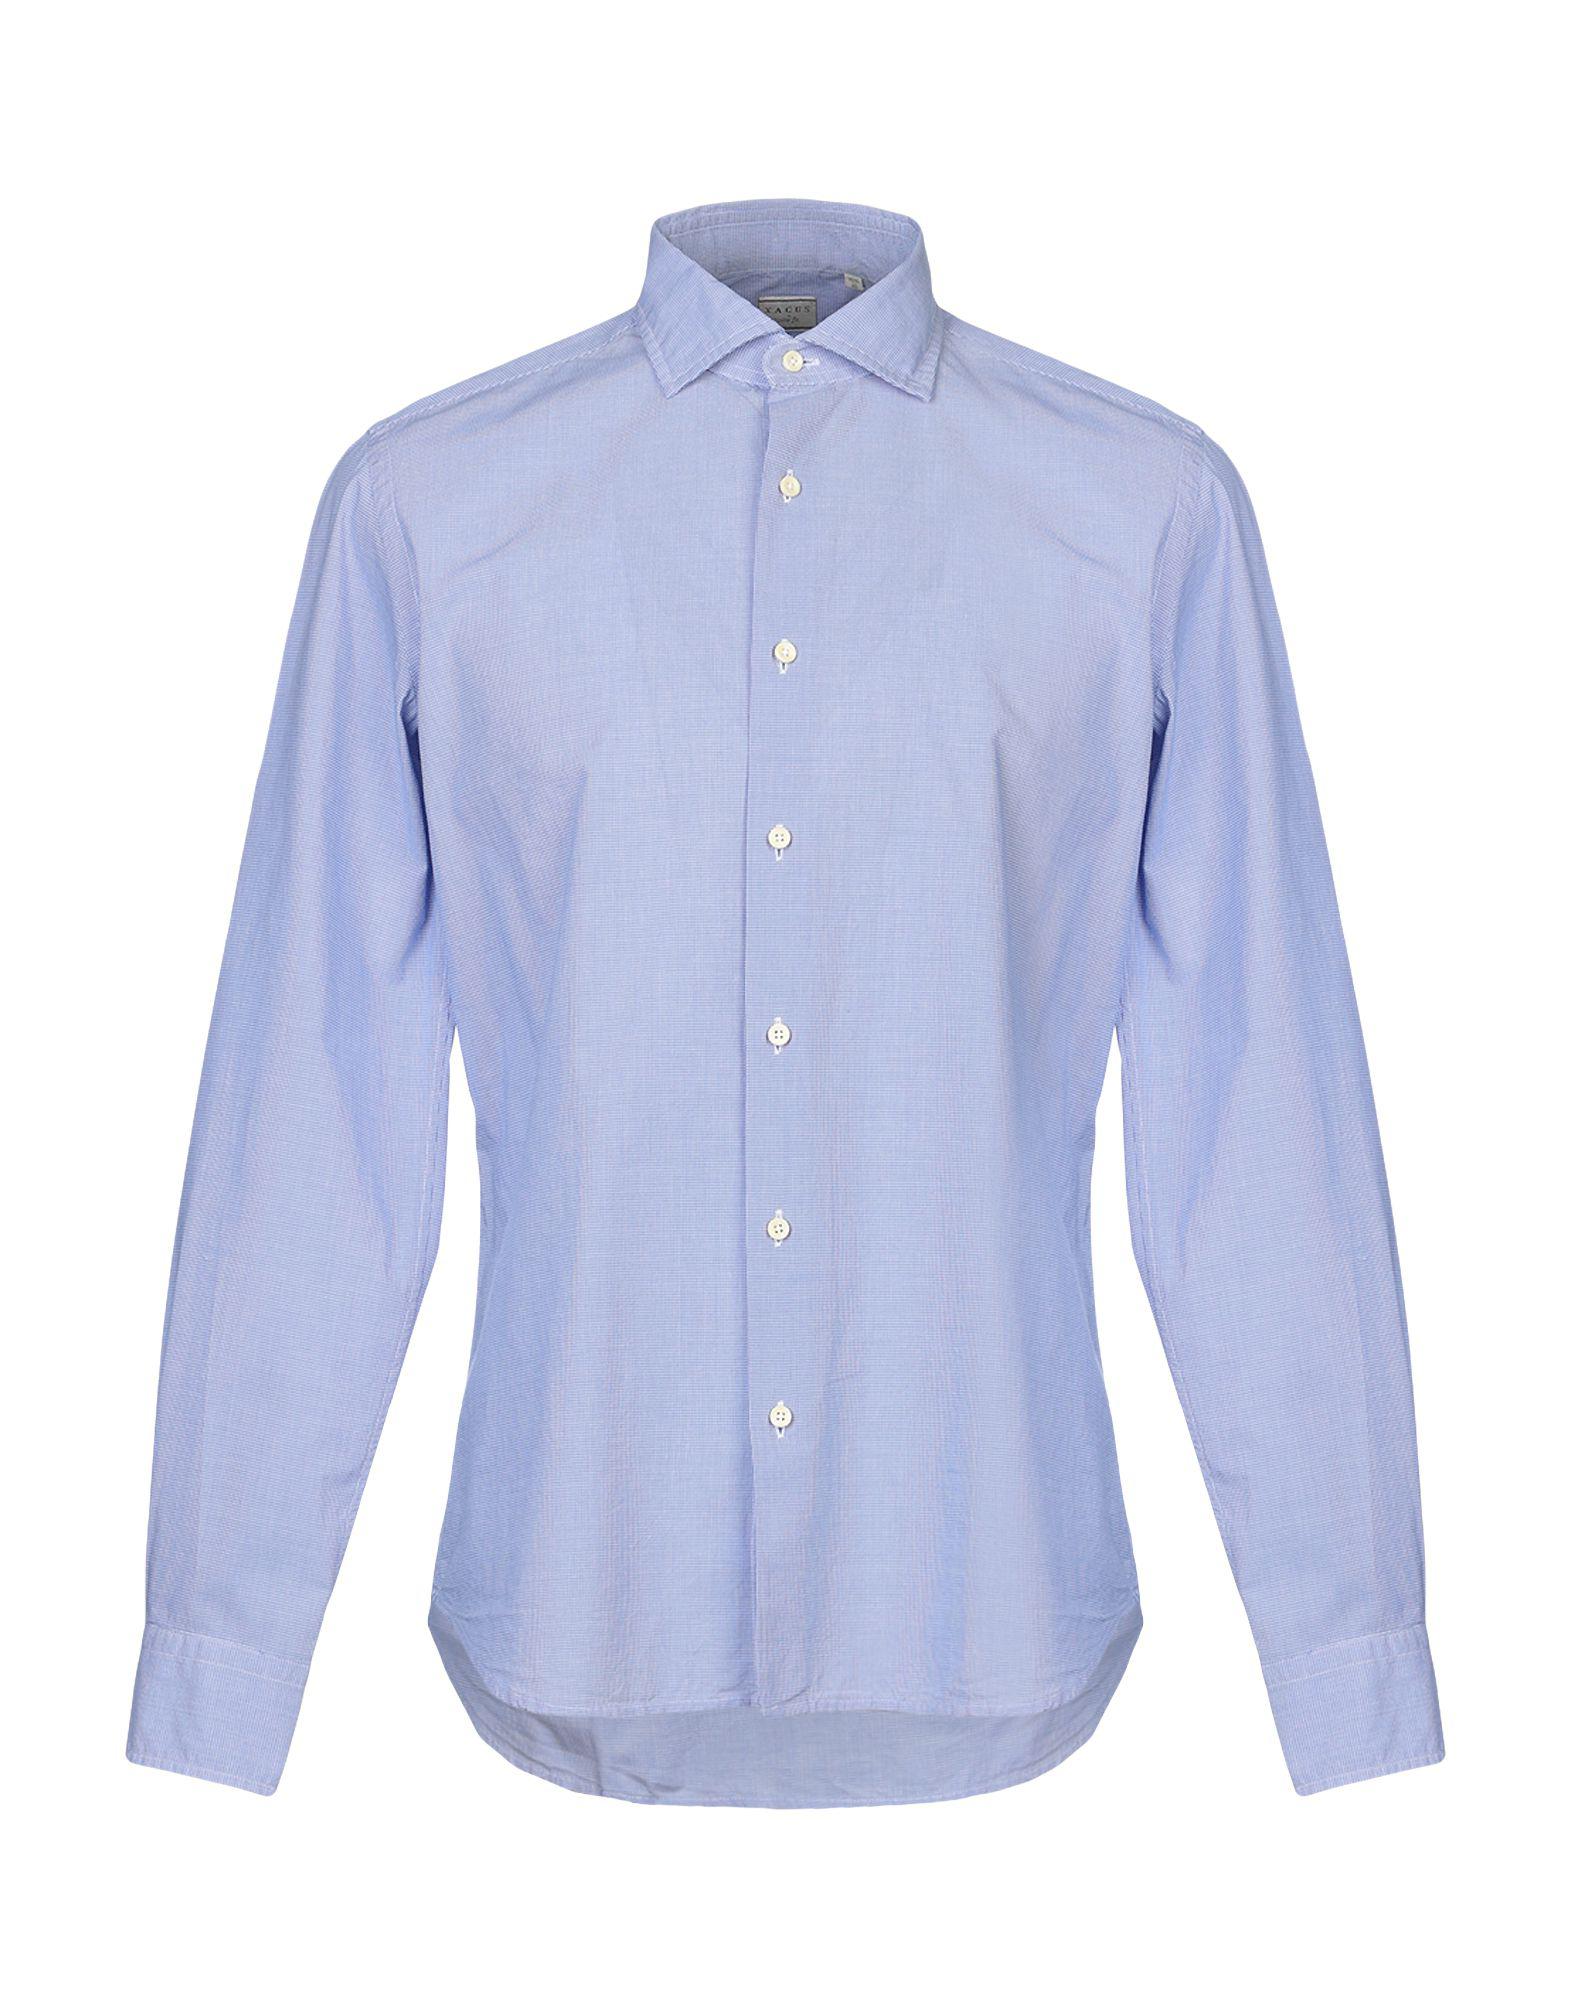 Xacus Shirt in Blue for Men - Lyst